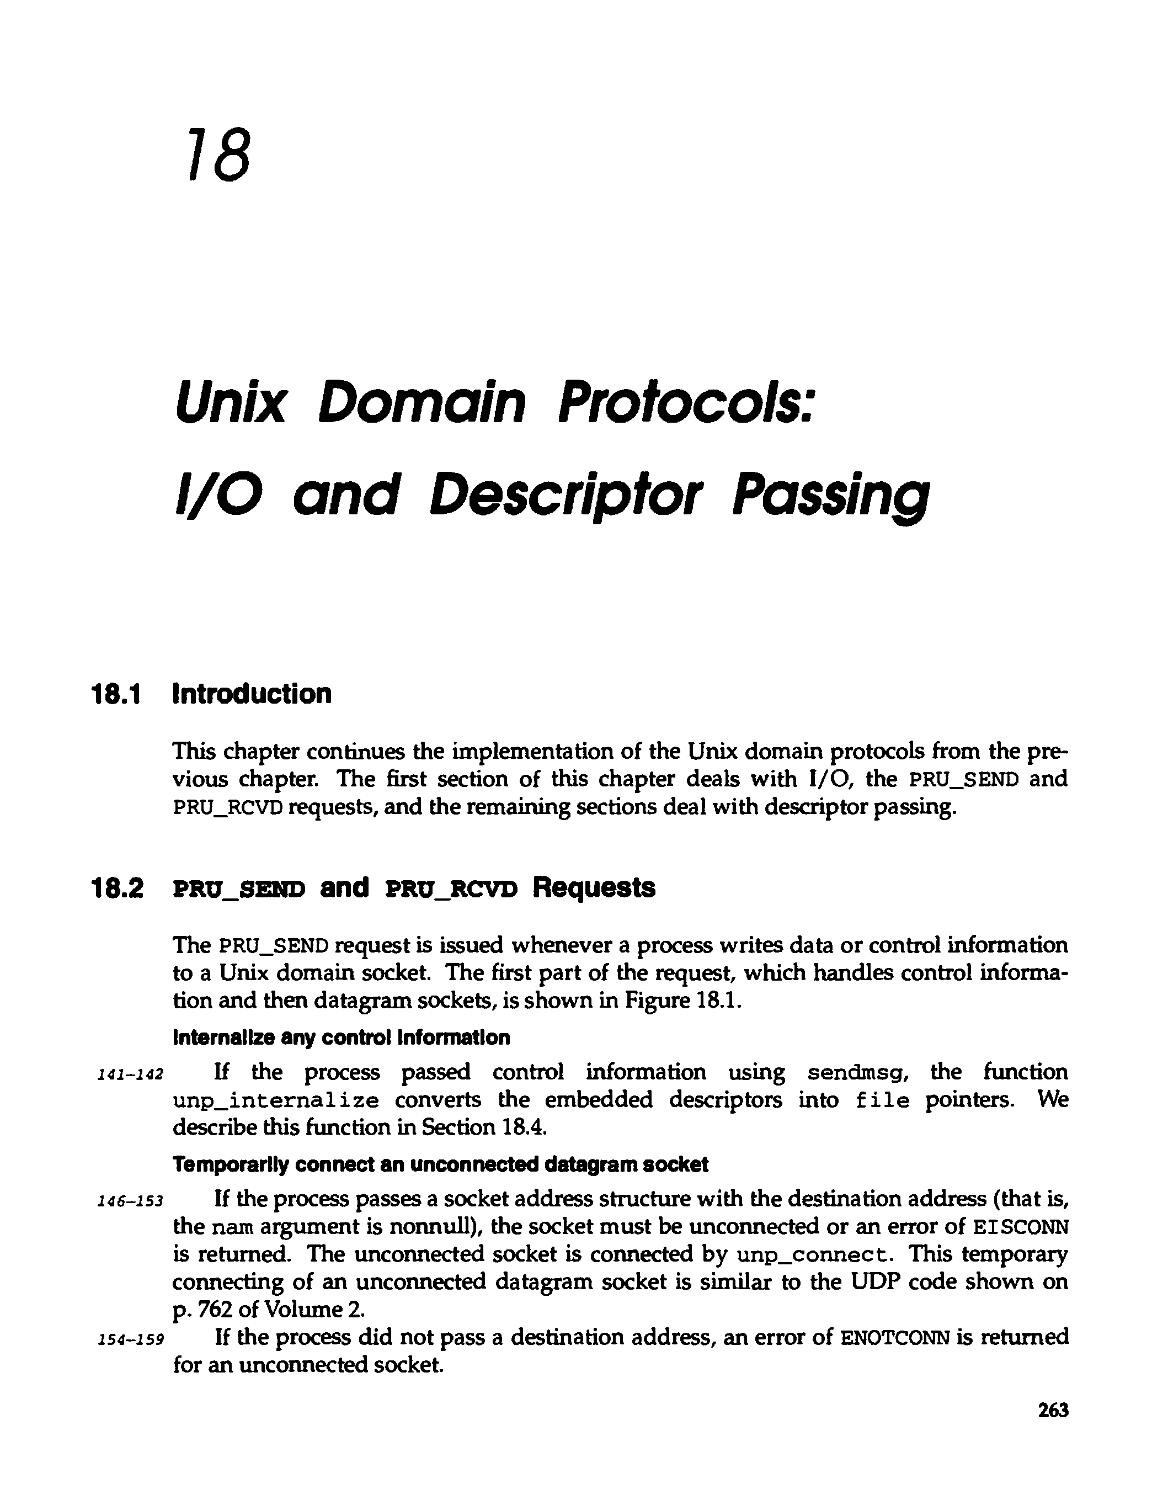 Chapter 18. Unix Domain Protocols: I/O and Descriptor Passing
18.2 PRU_SEND and PRU_RCVD Requests